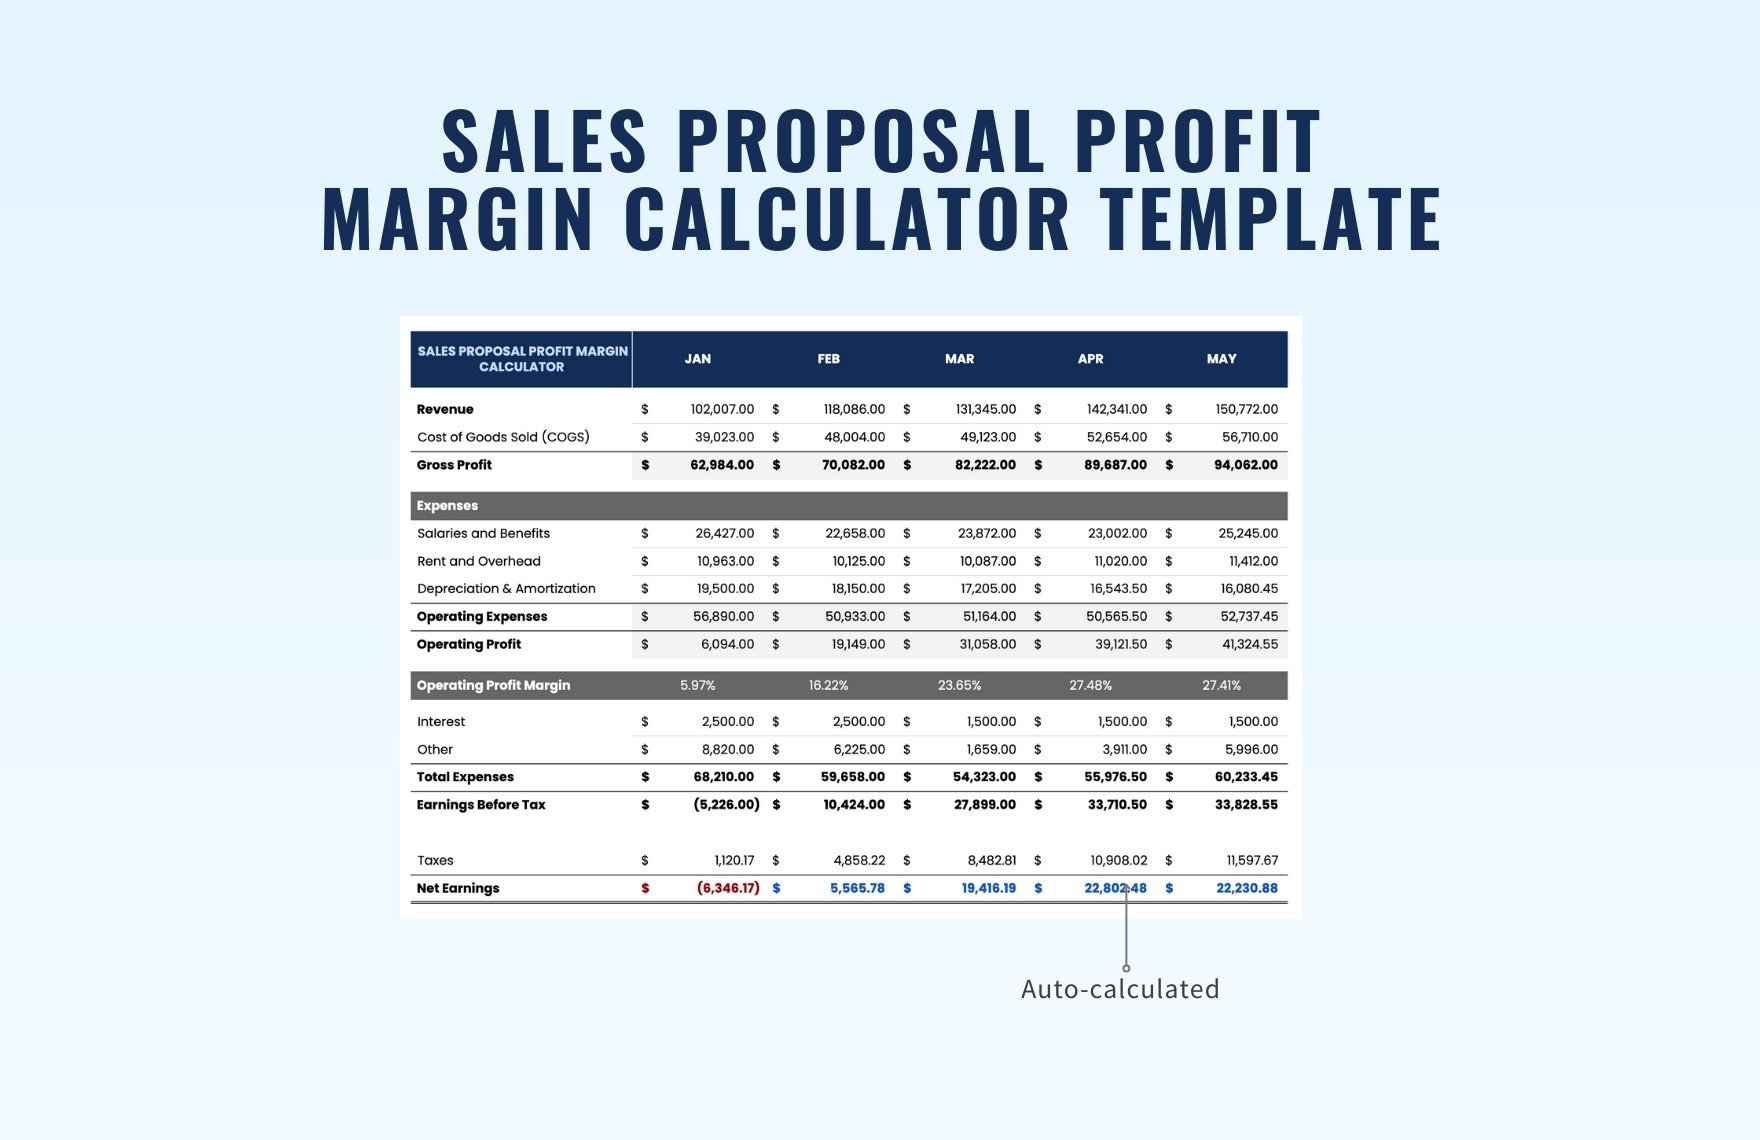 Sales Proposal Profit Margin Calculator Template